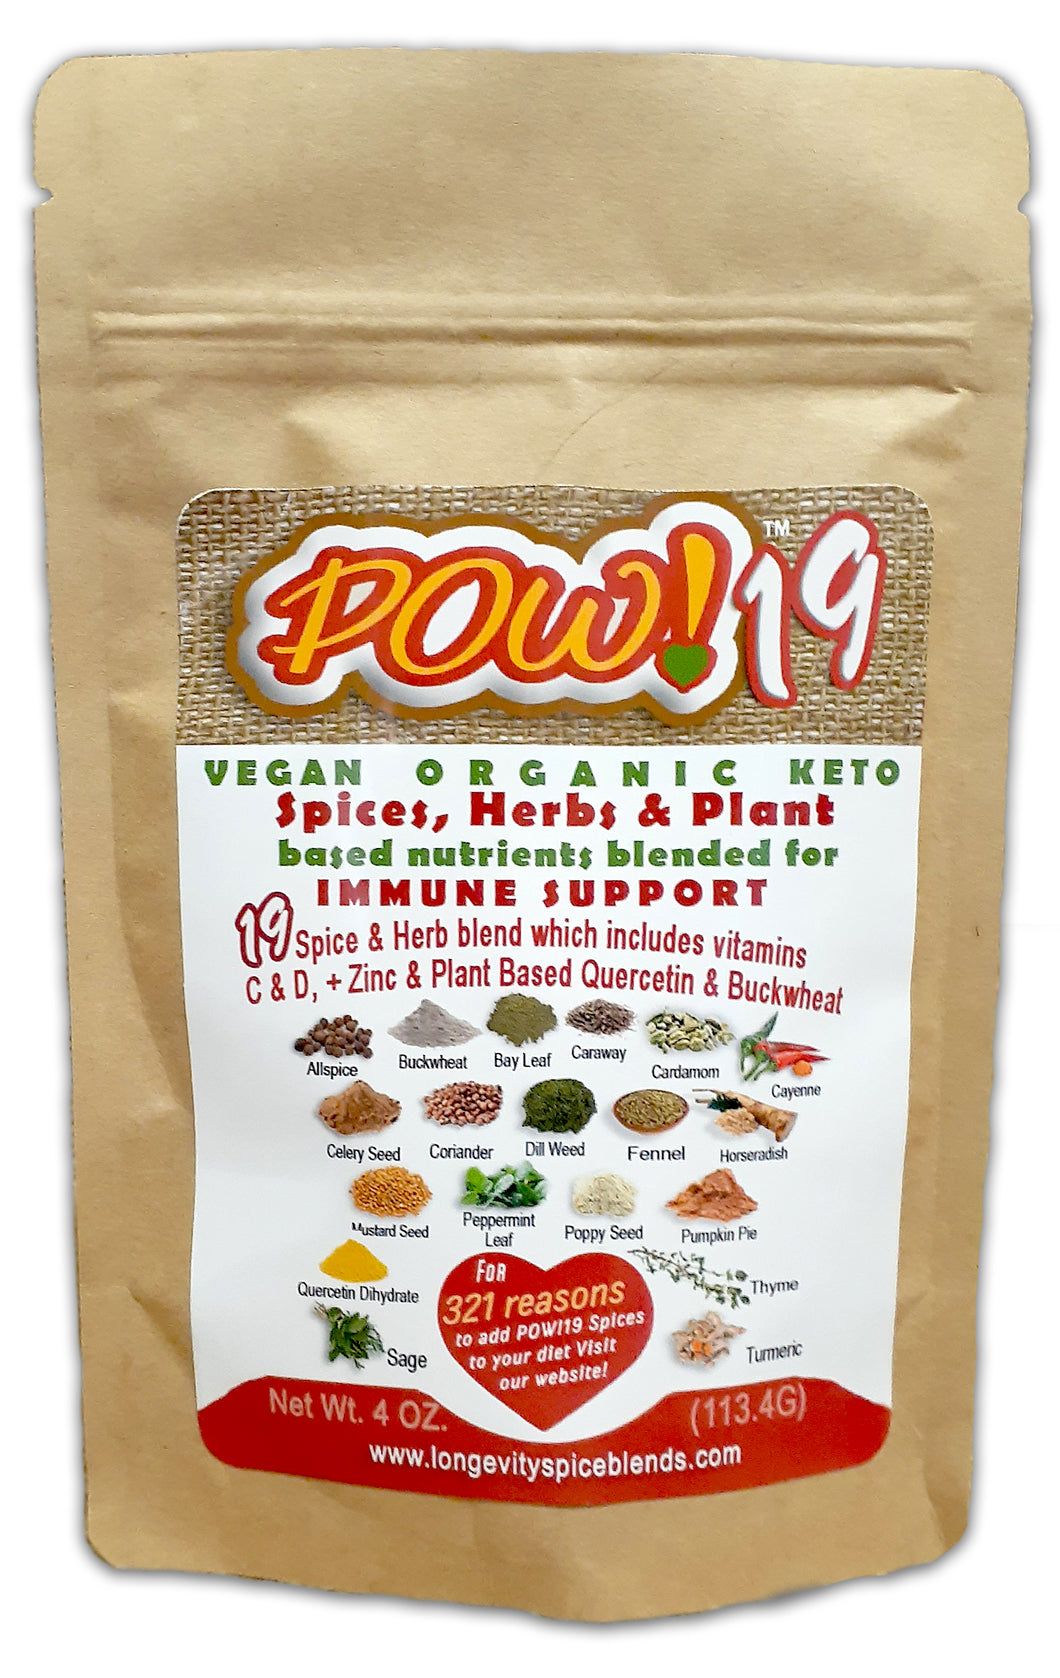 POW19 - 19 Immune Boosting Spices, Herbs & Plant Based Nutrition, including C, D, Zinc & Quercetin (4 oz. pouch - 45 tsp. servings)